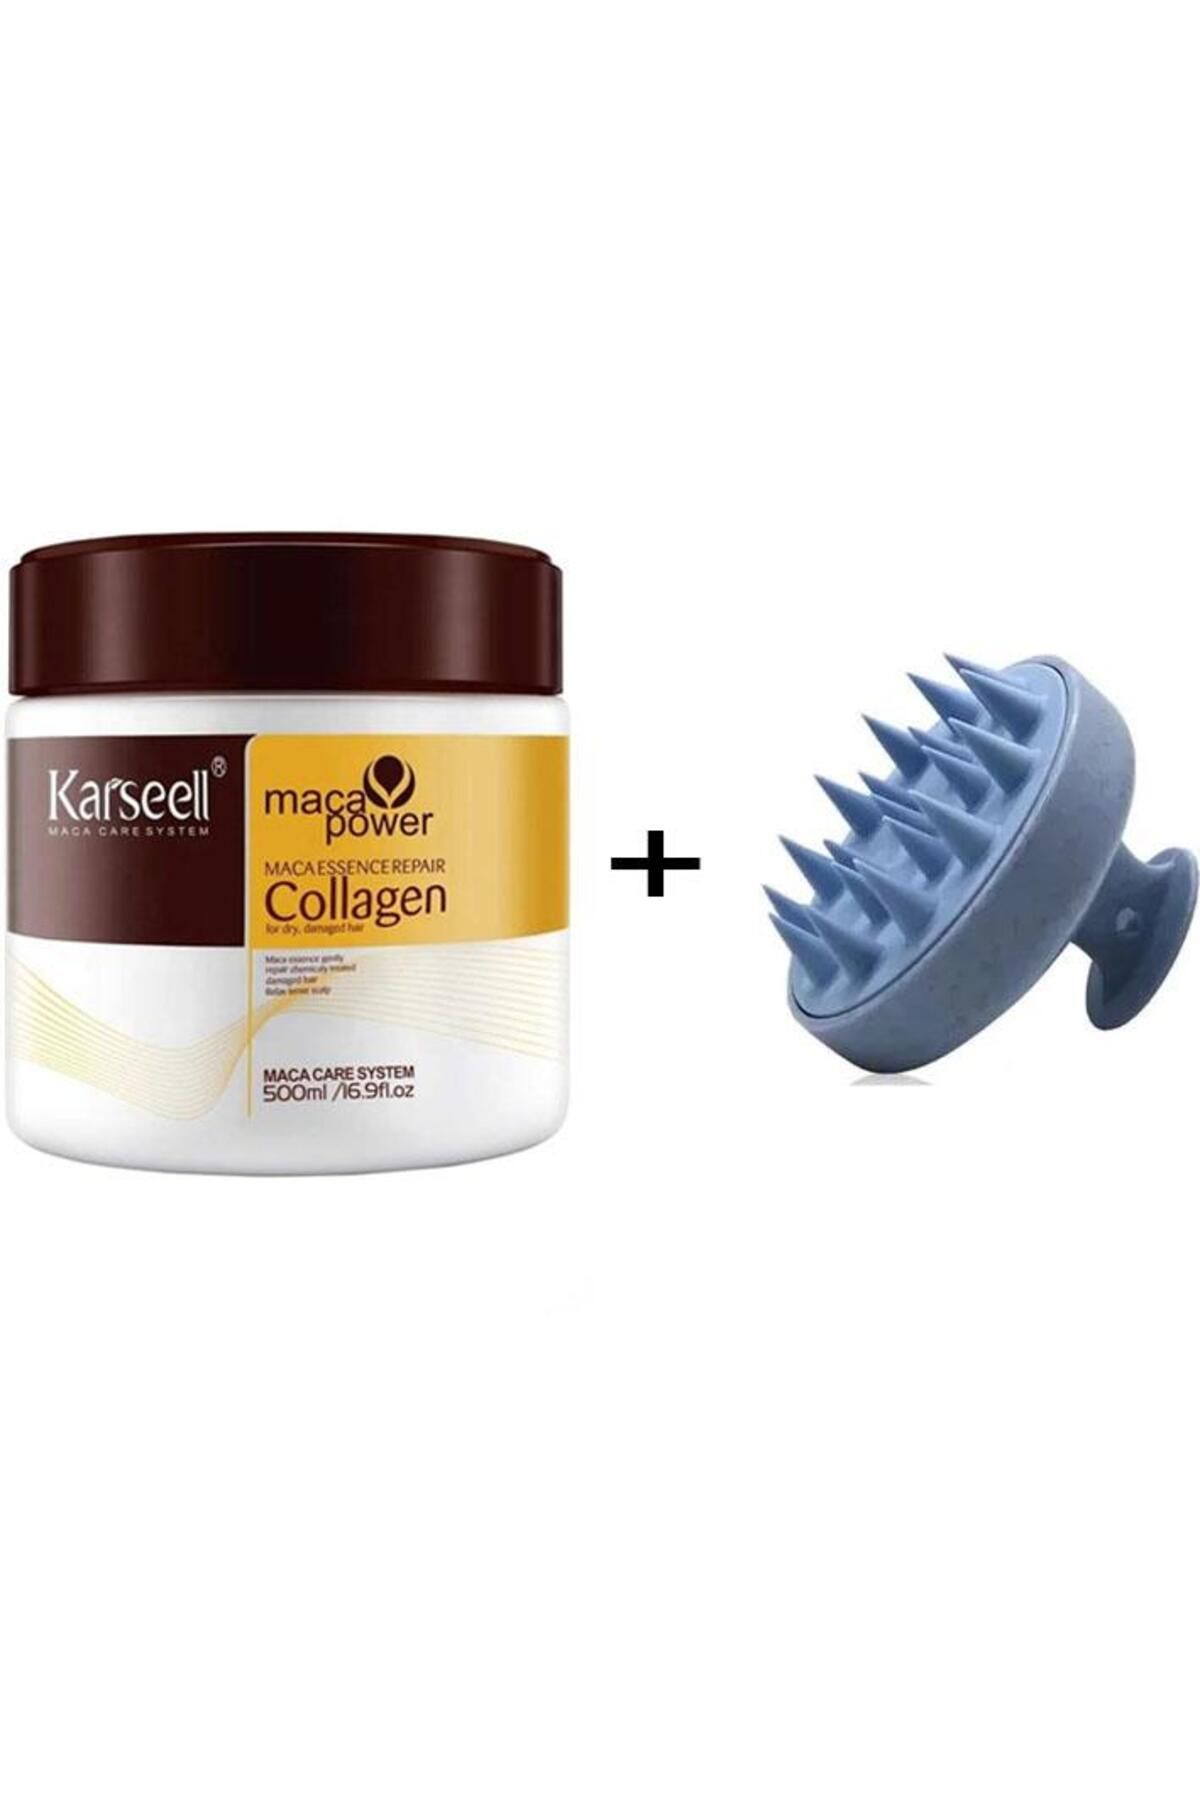 Fontenay Karseell Collagen Saç Maskesi 500 ml Saç Yıkama & Masaj Tarağı Mavi 2'li Set